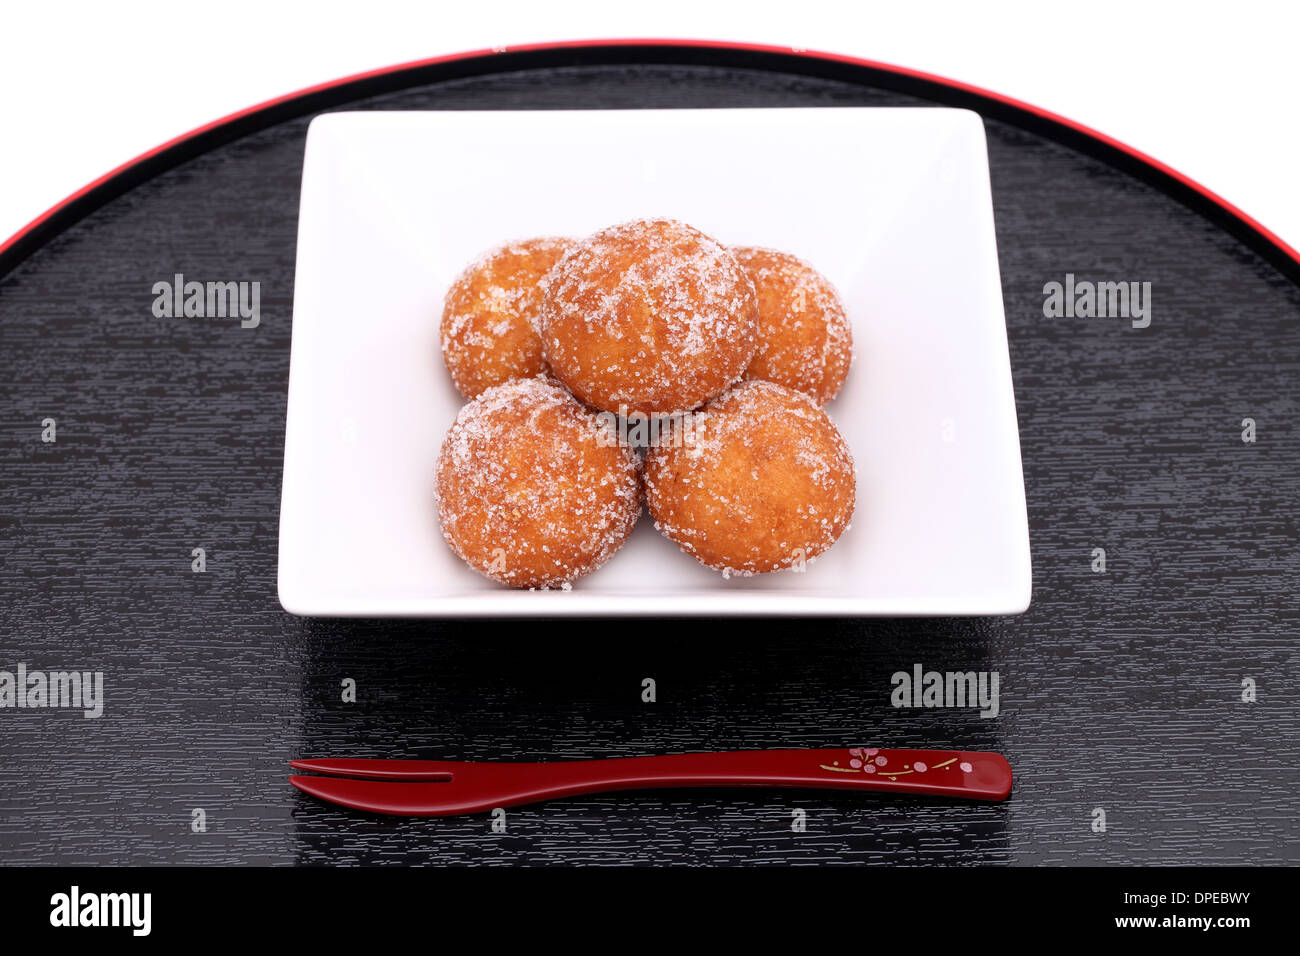 japanese sugar round donut Stock Photo